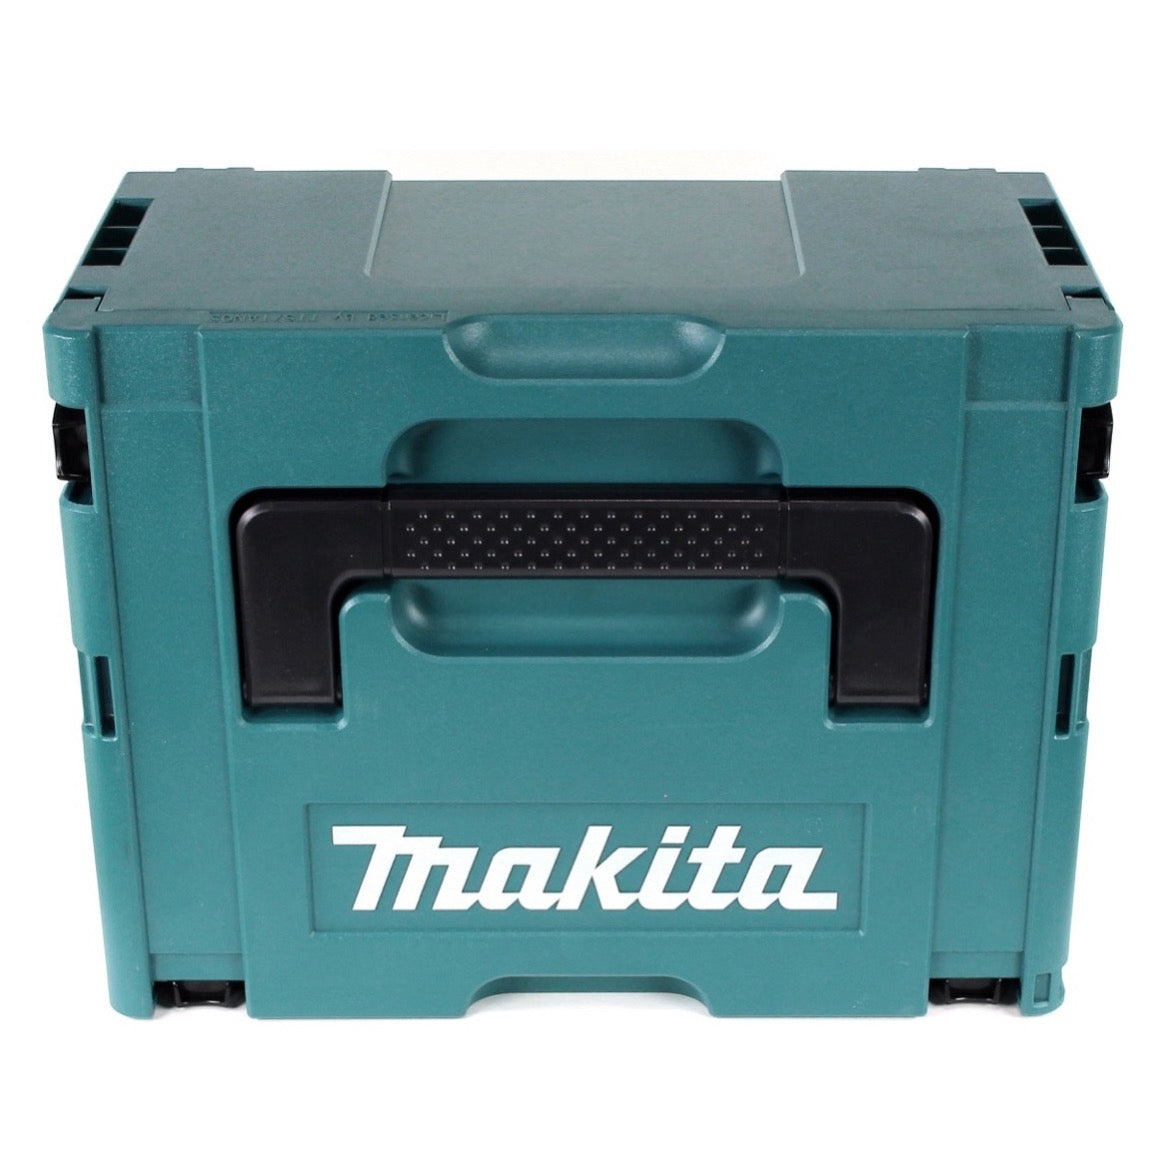 Makita DCS 553 RT1J Akku Metallhandkreissäge 18V 150 mm Brushless + 1x Akku 5,0Ah + Ladegerät + Makpac